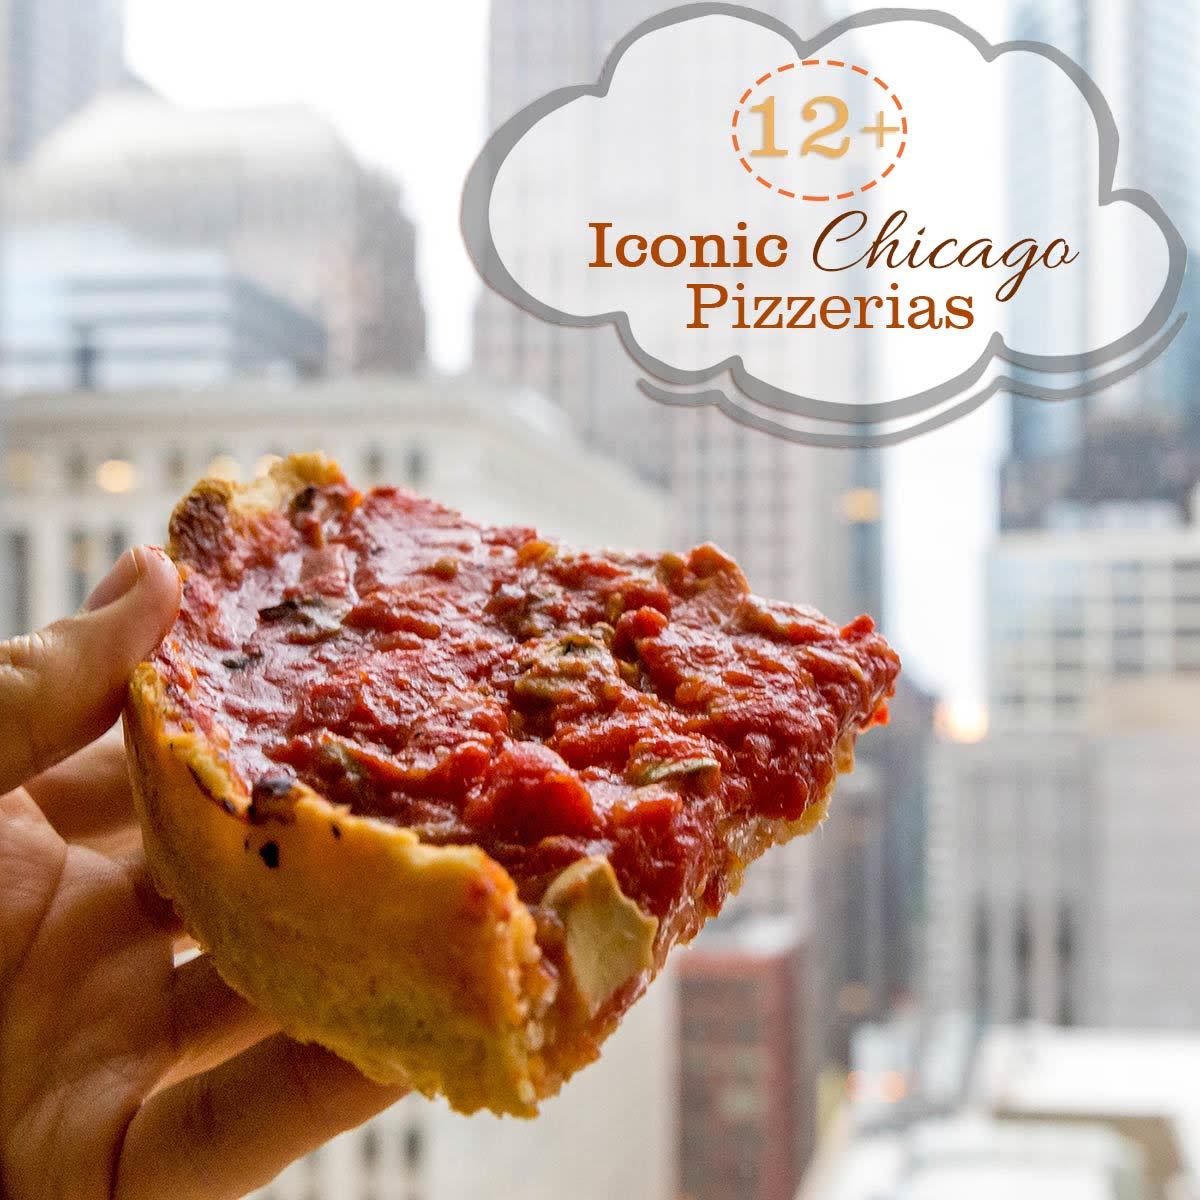 Slice of Pizzeria Uno deep dish pizza overlooking Chicago